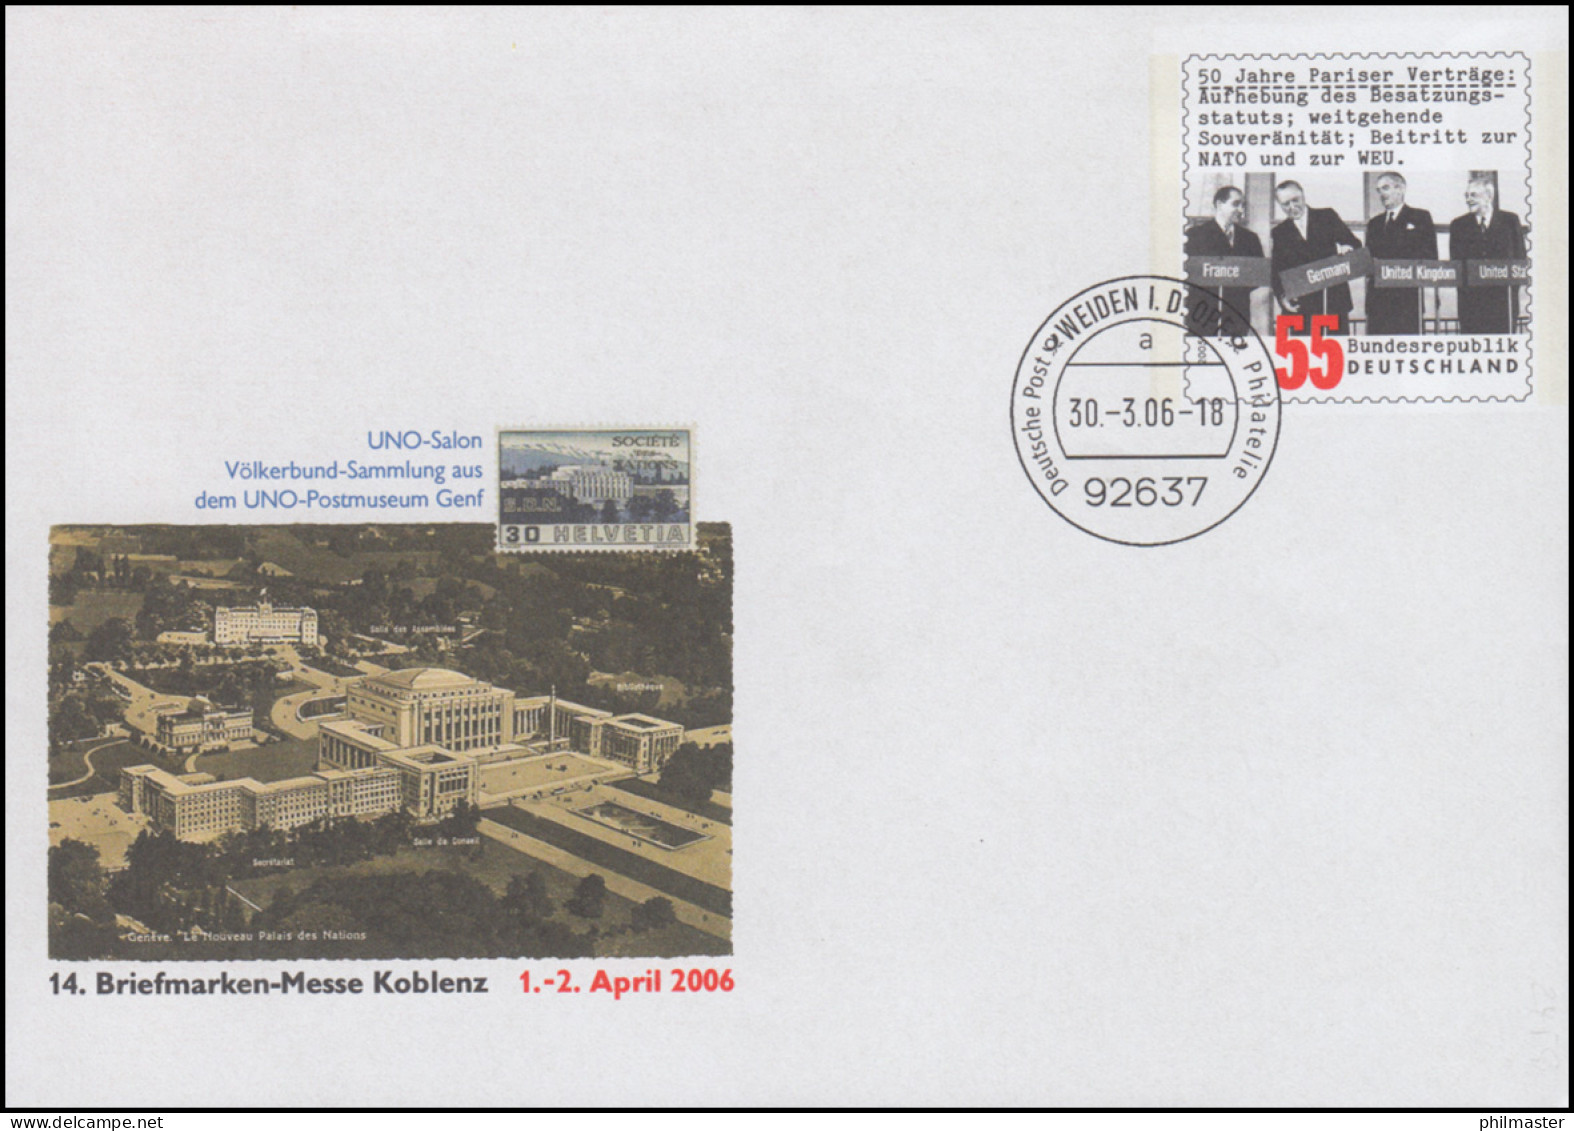 USo 116 Messe Koblenz - UNO Postmuseum Genf 2006, VS-O Weiden 30.3.06 - Enveloppes - Neuves